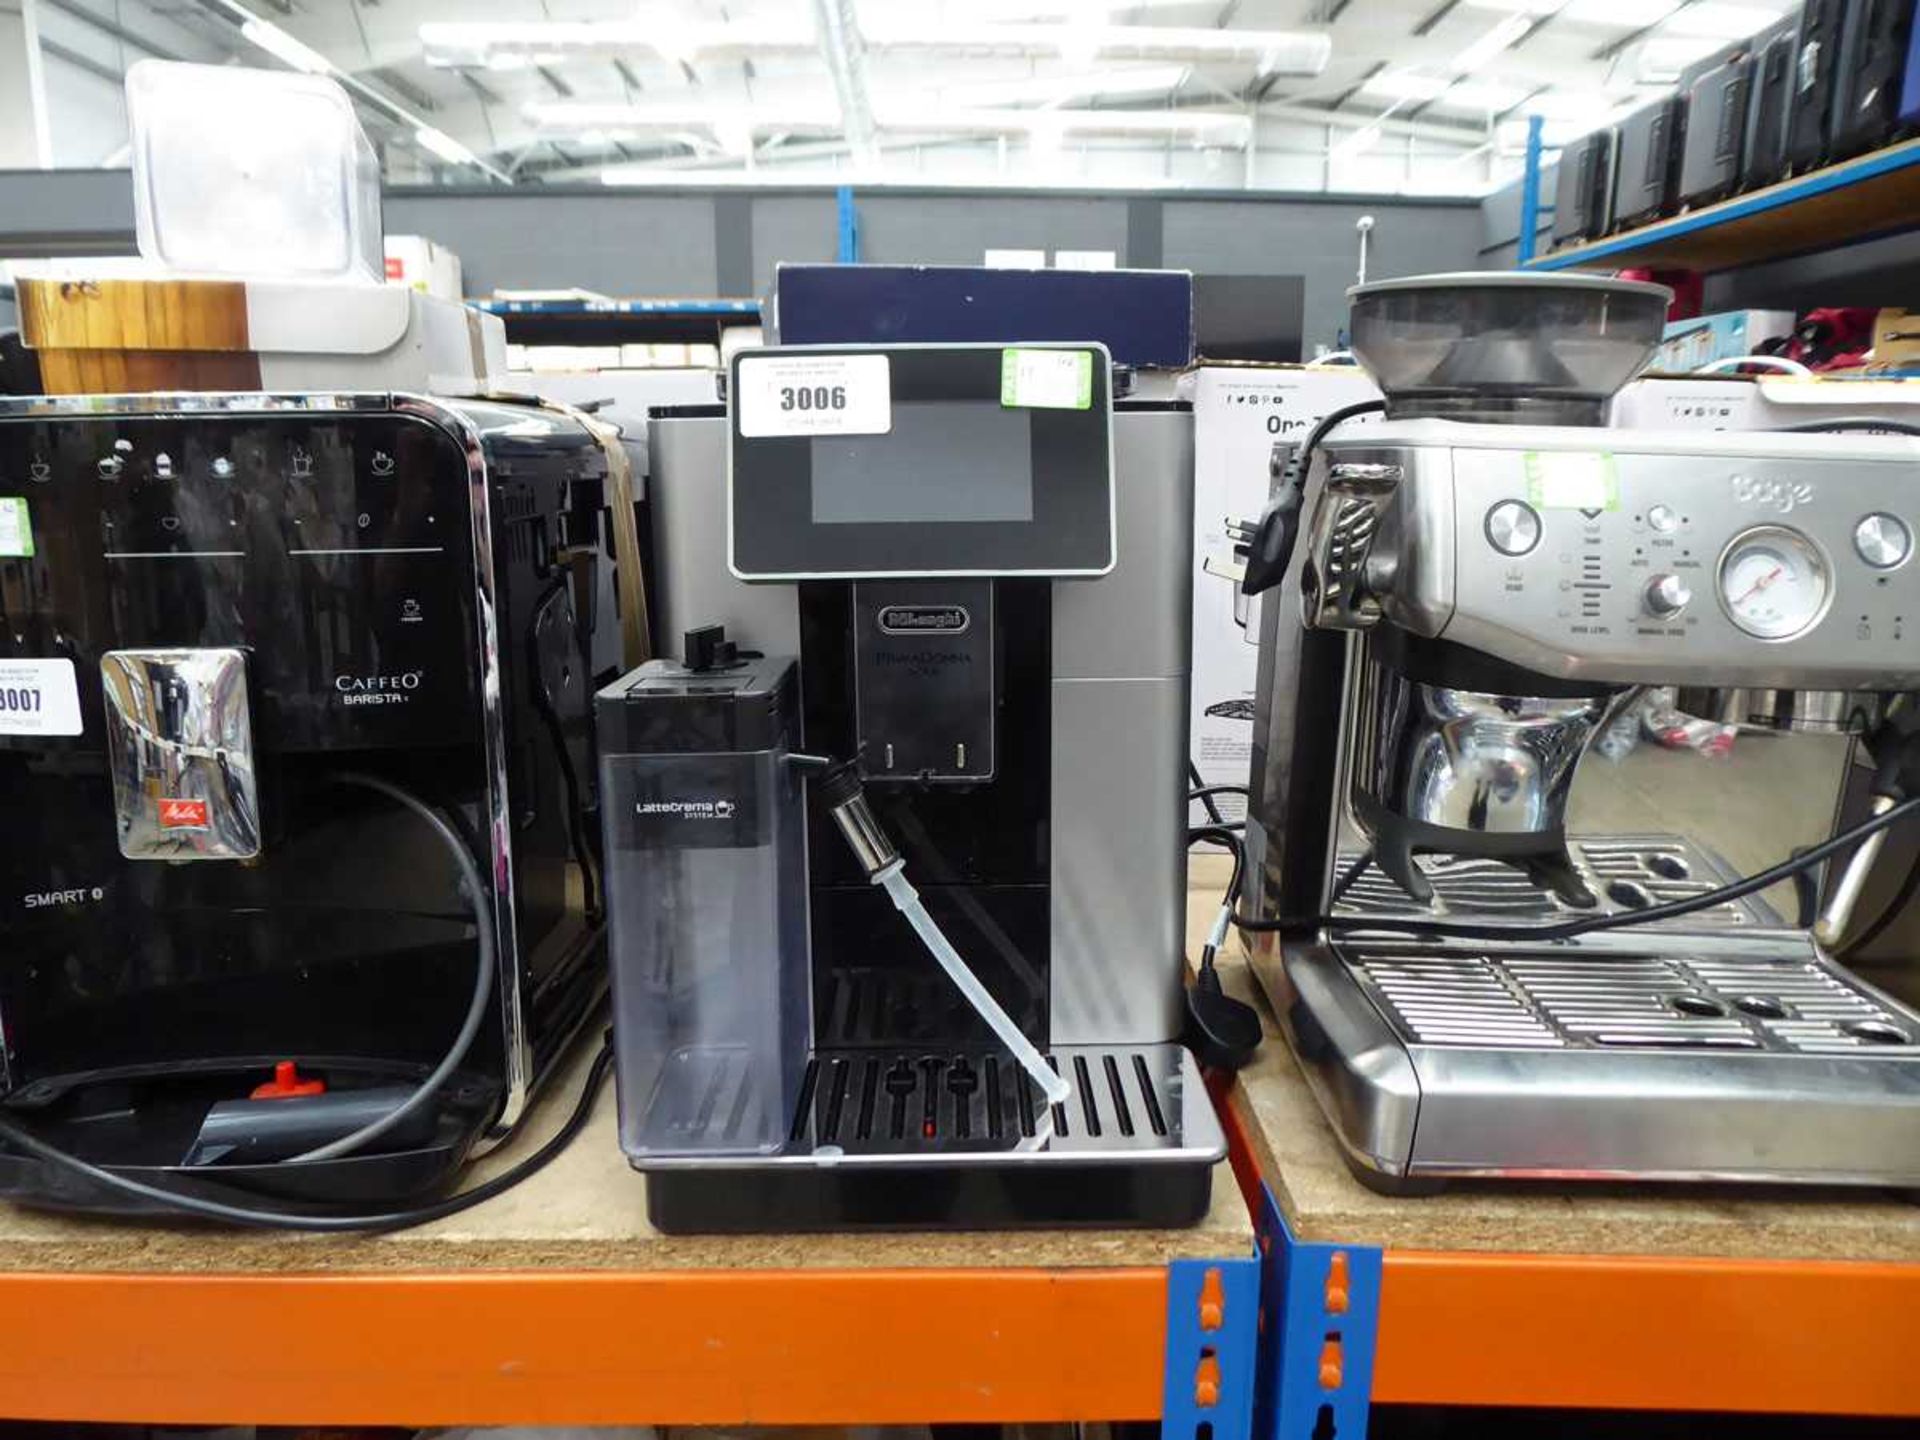 +VAT Unboxed Prima Donna Sol automatic coffee machine